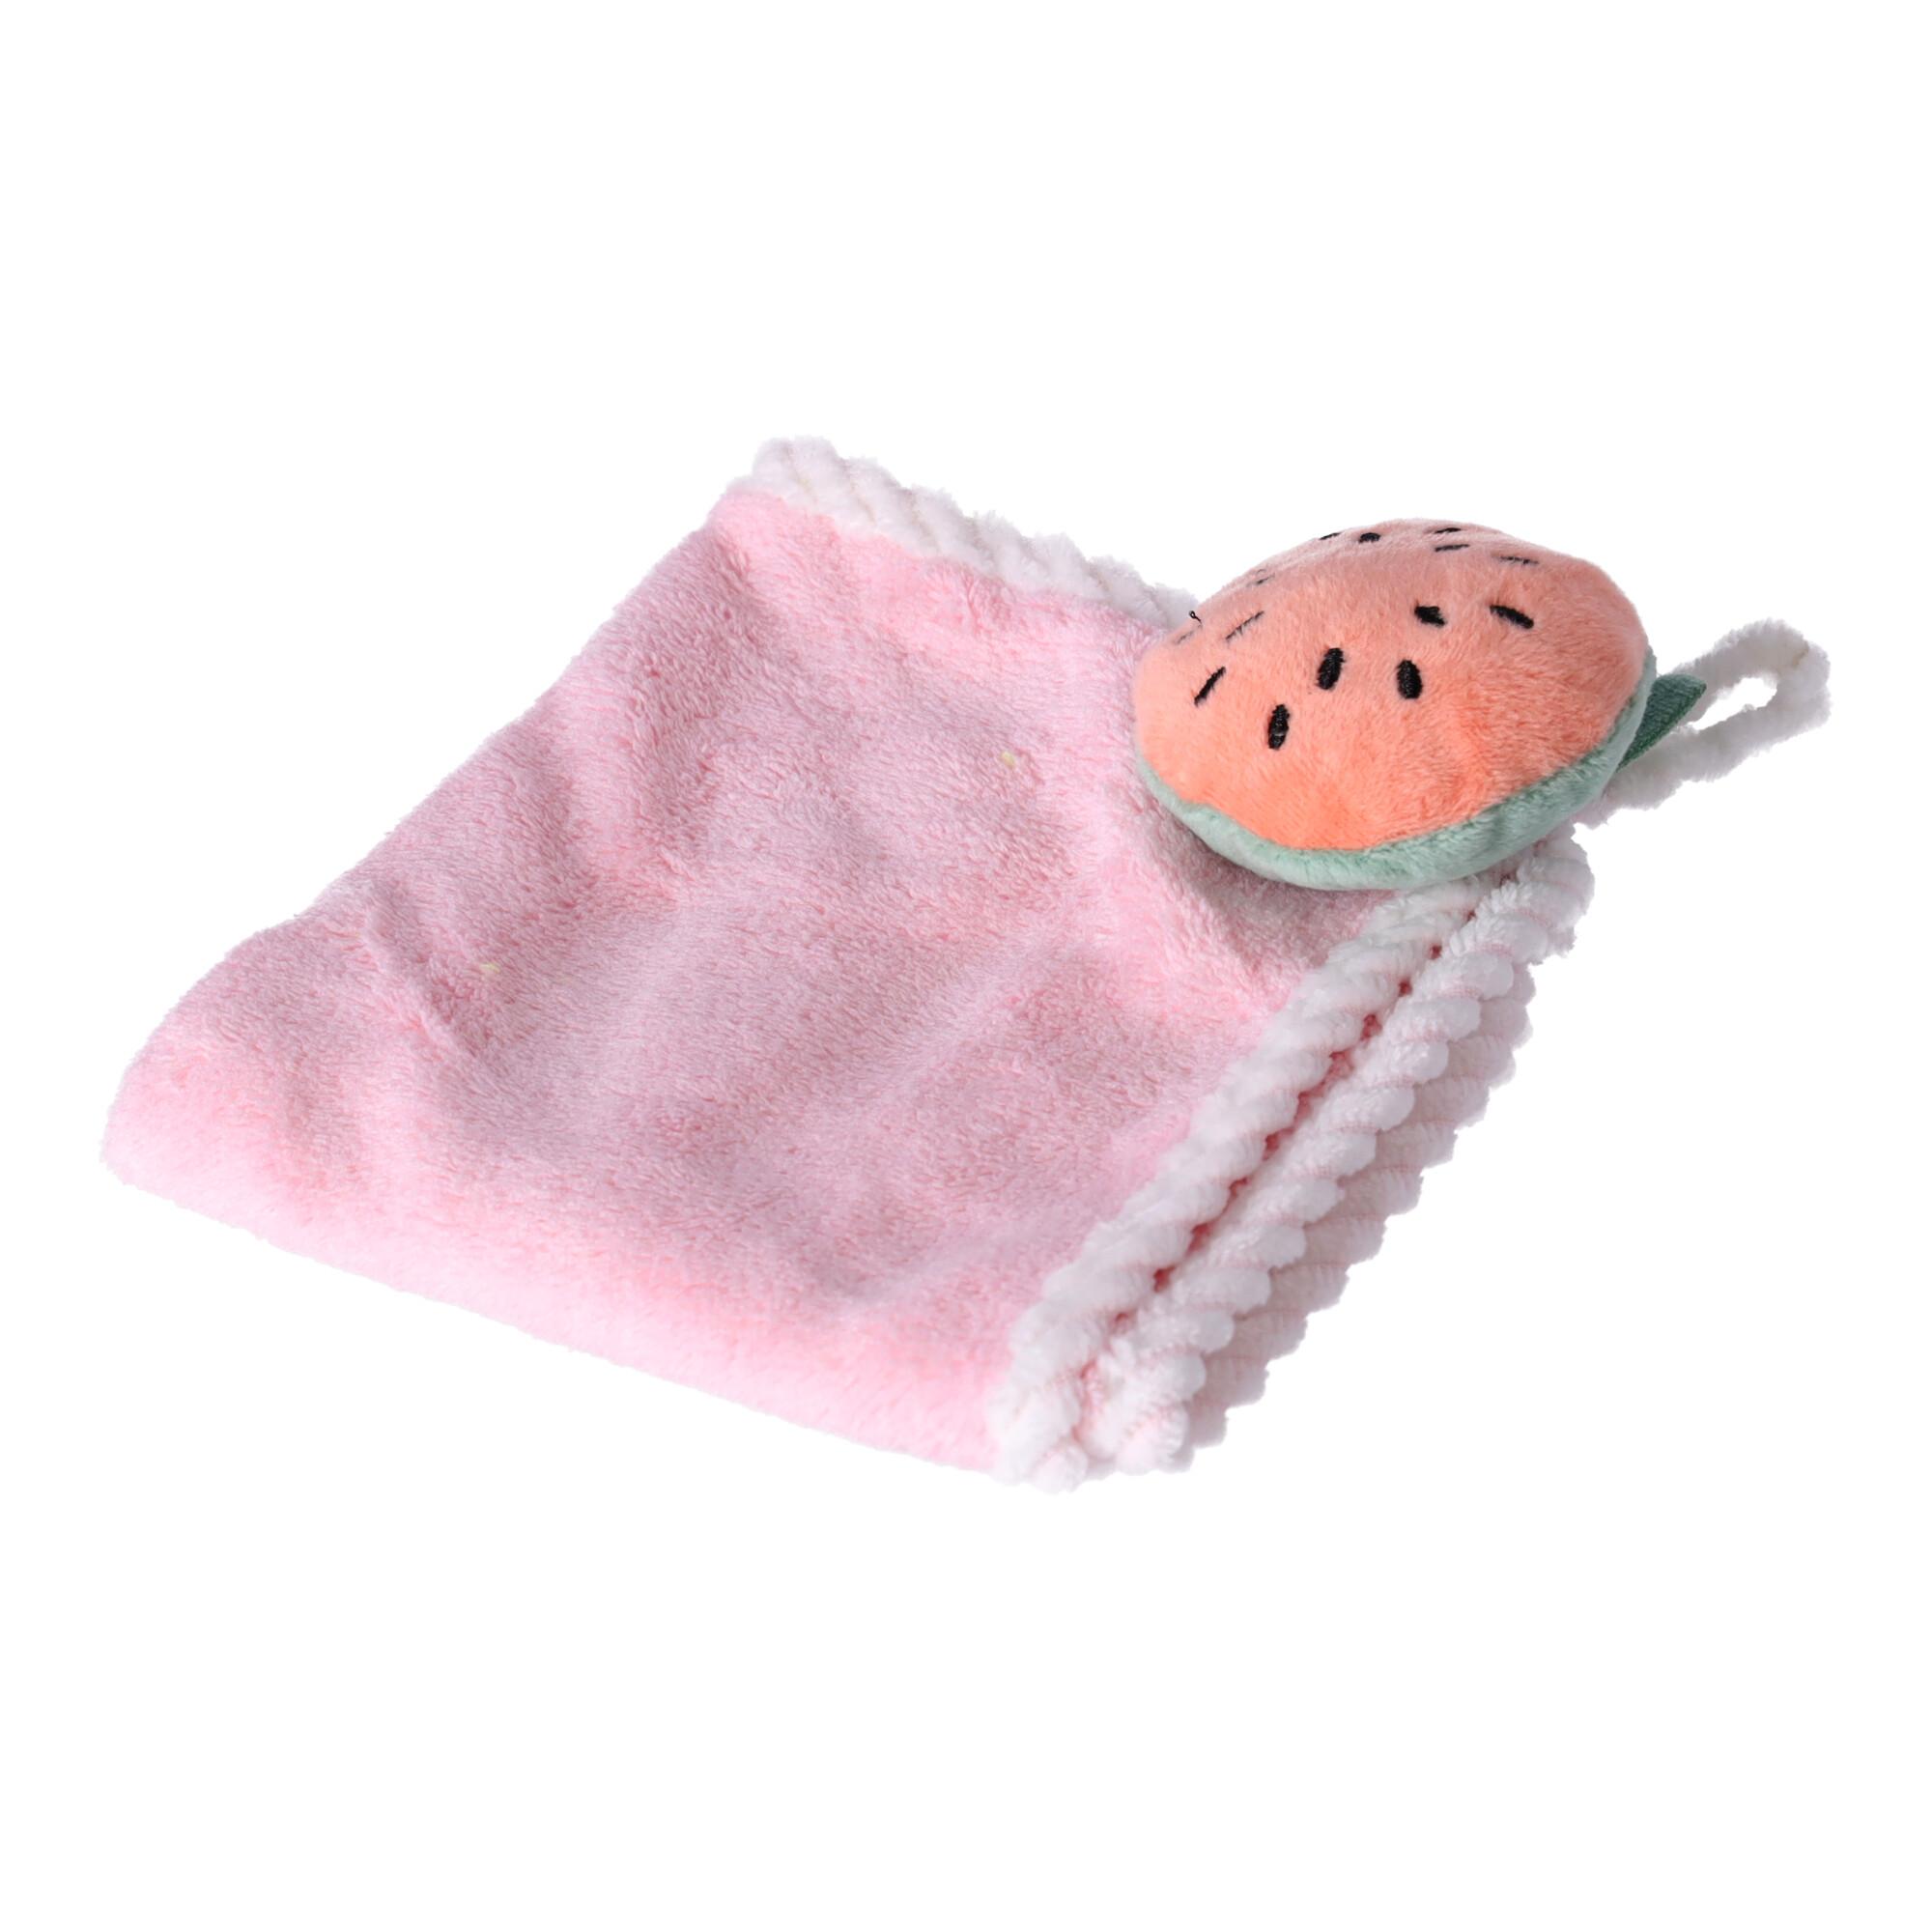 Cute kitchen towel - pink